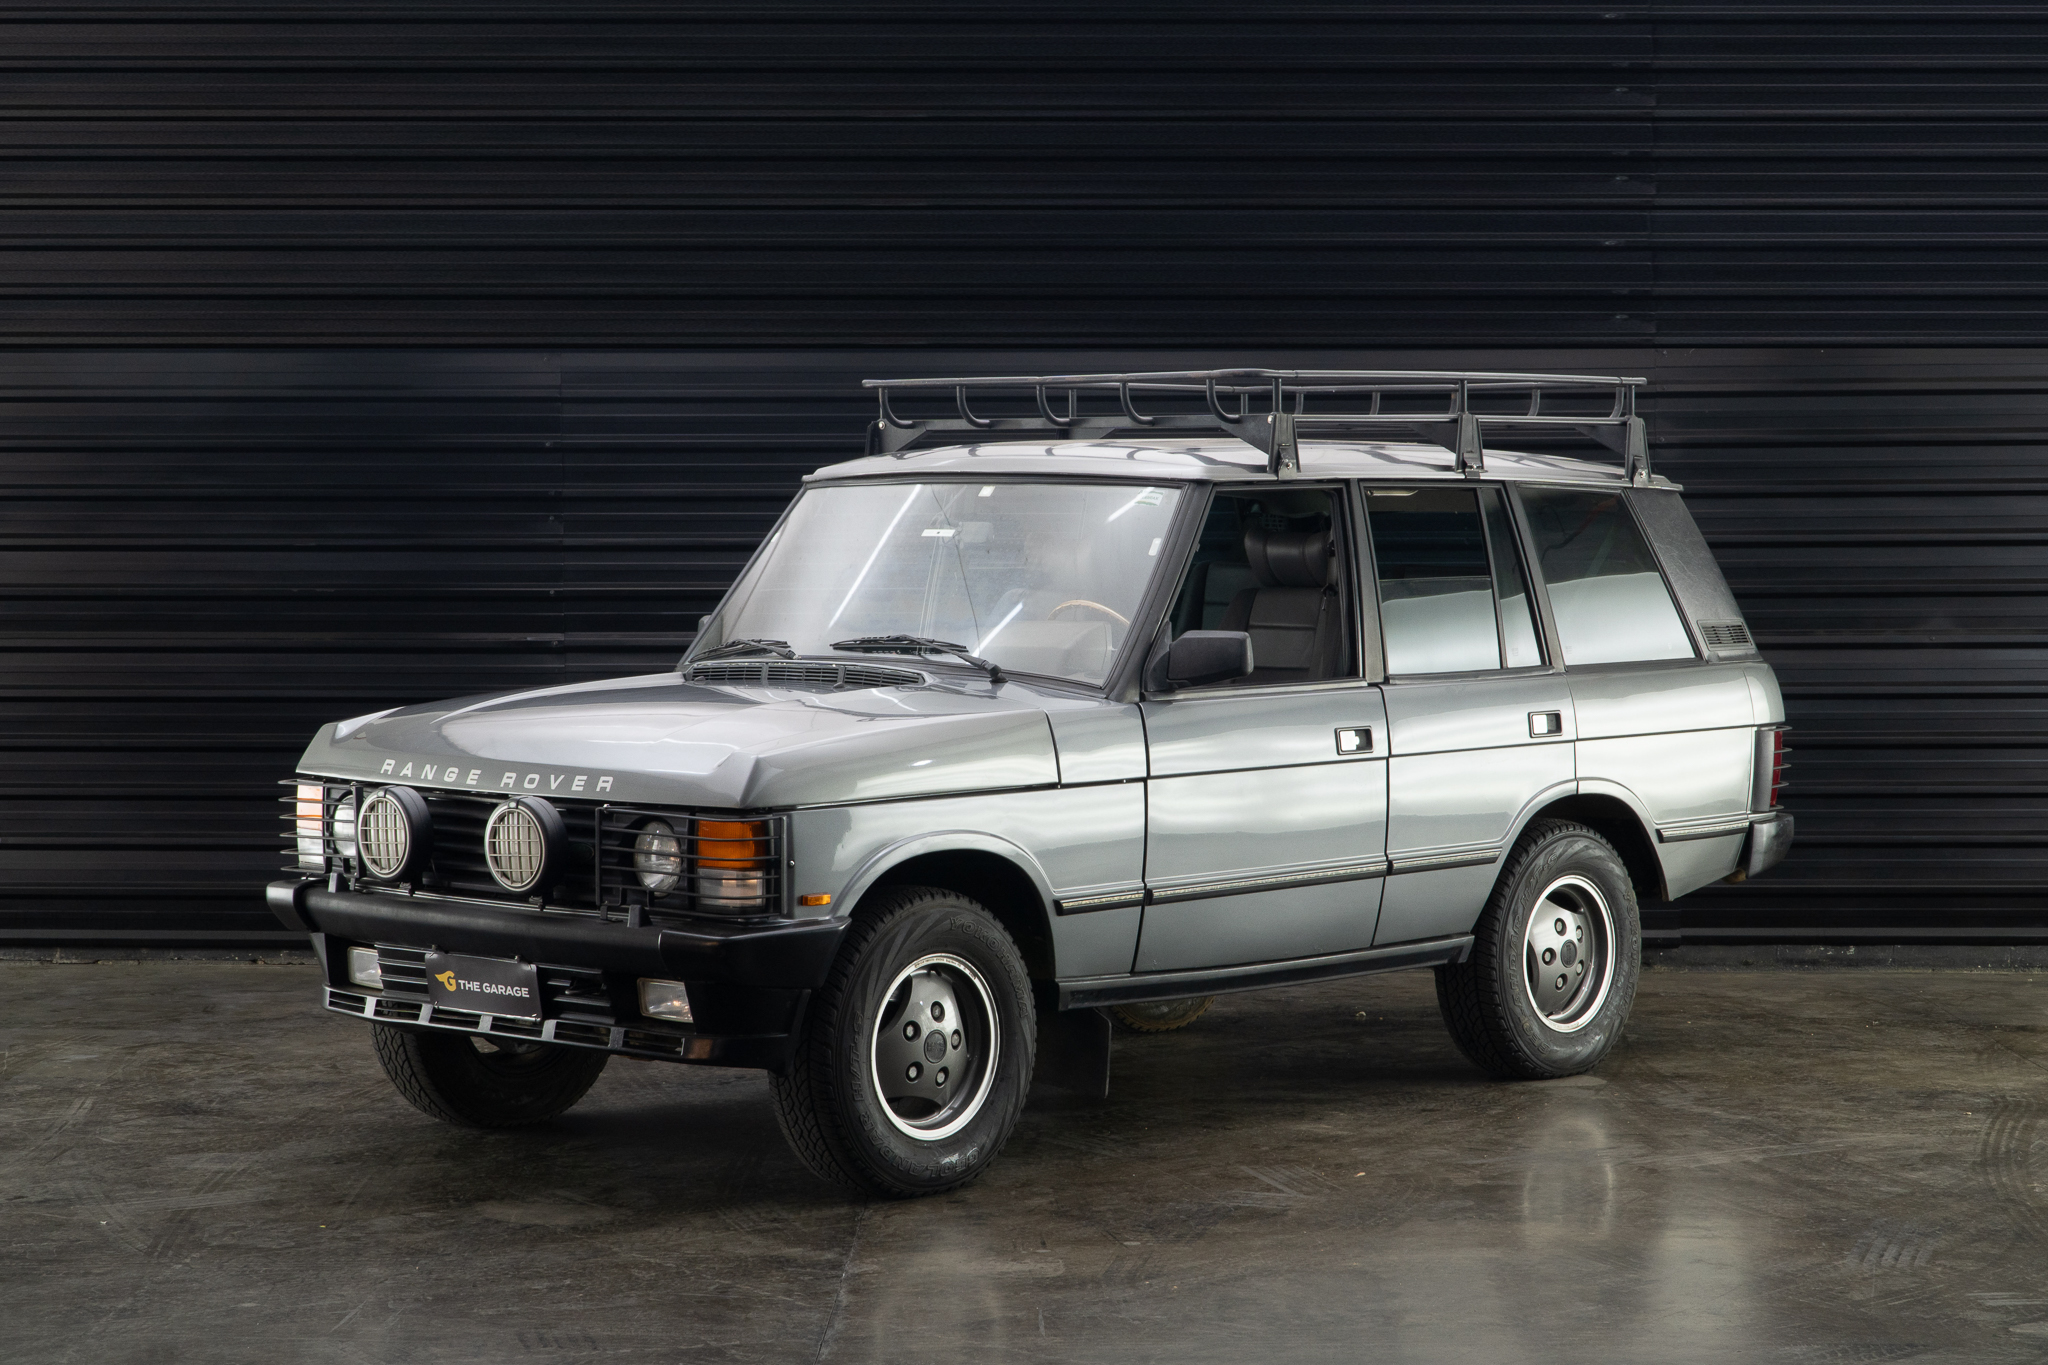 1992 Land Rover Range Rover Classic a venda the garage for sale